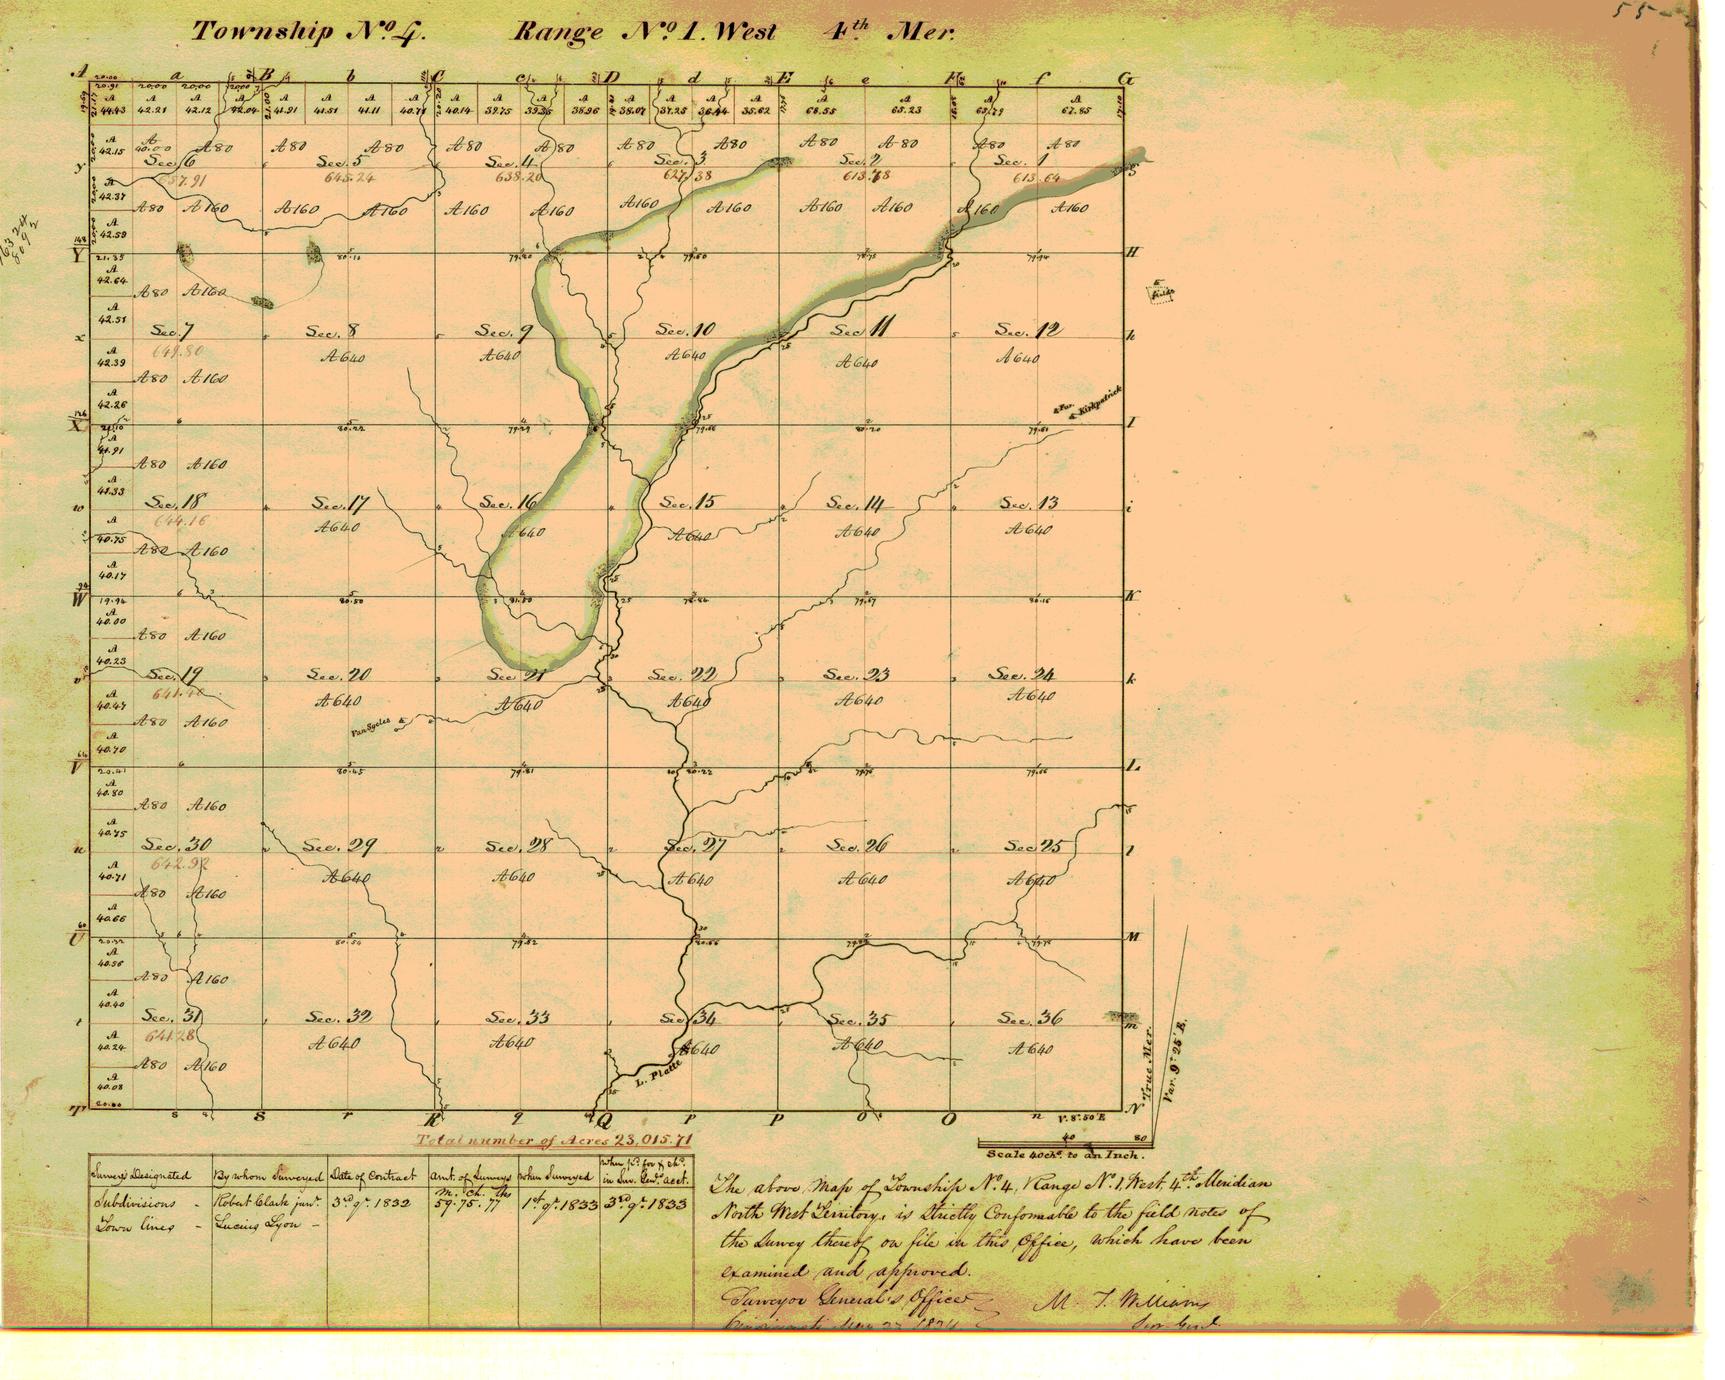 [Public Land Survey System map: Wisconsin Township 04 North, Range 01 West]